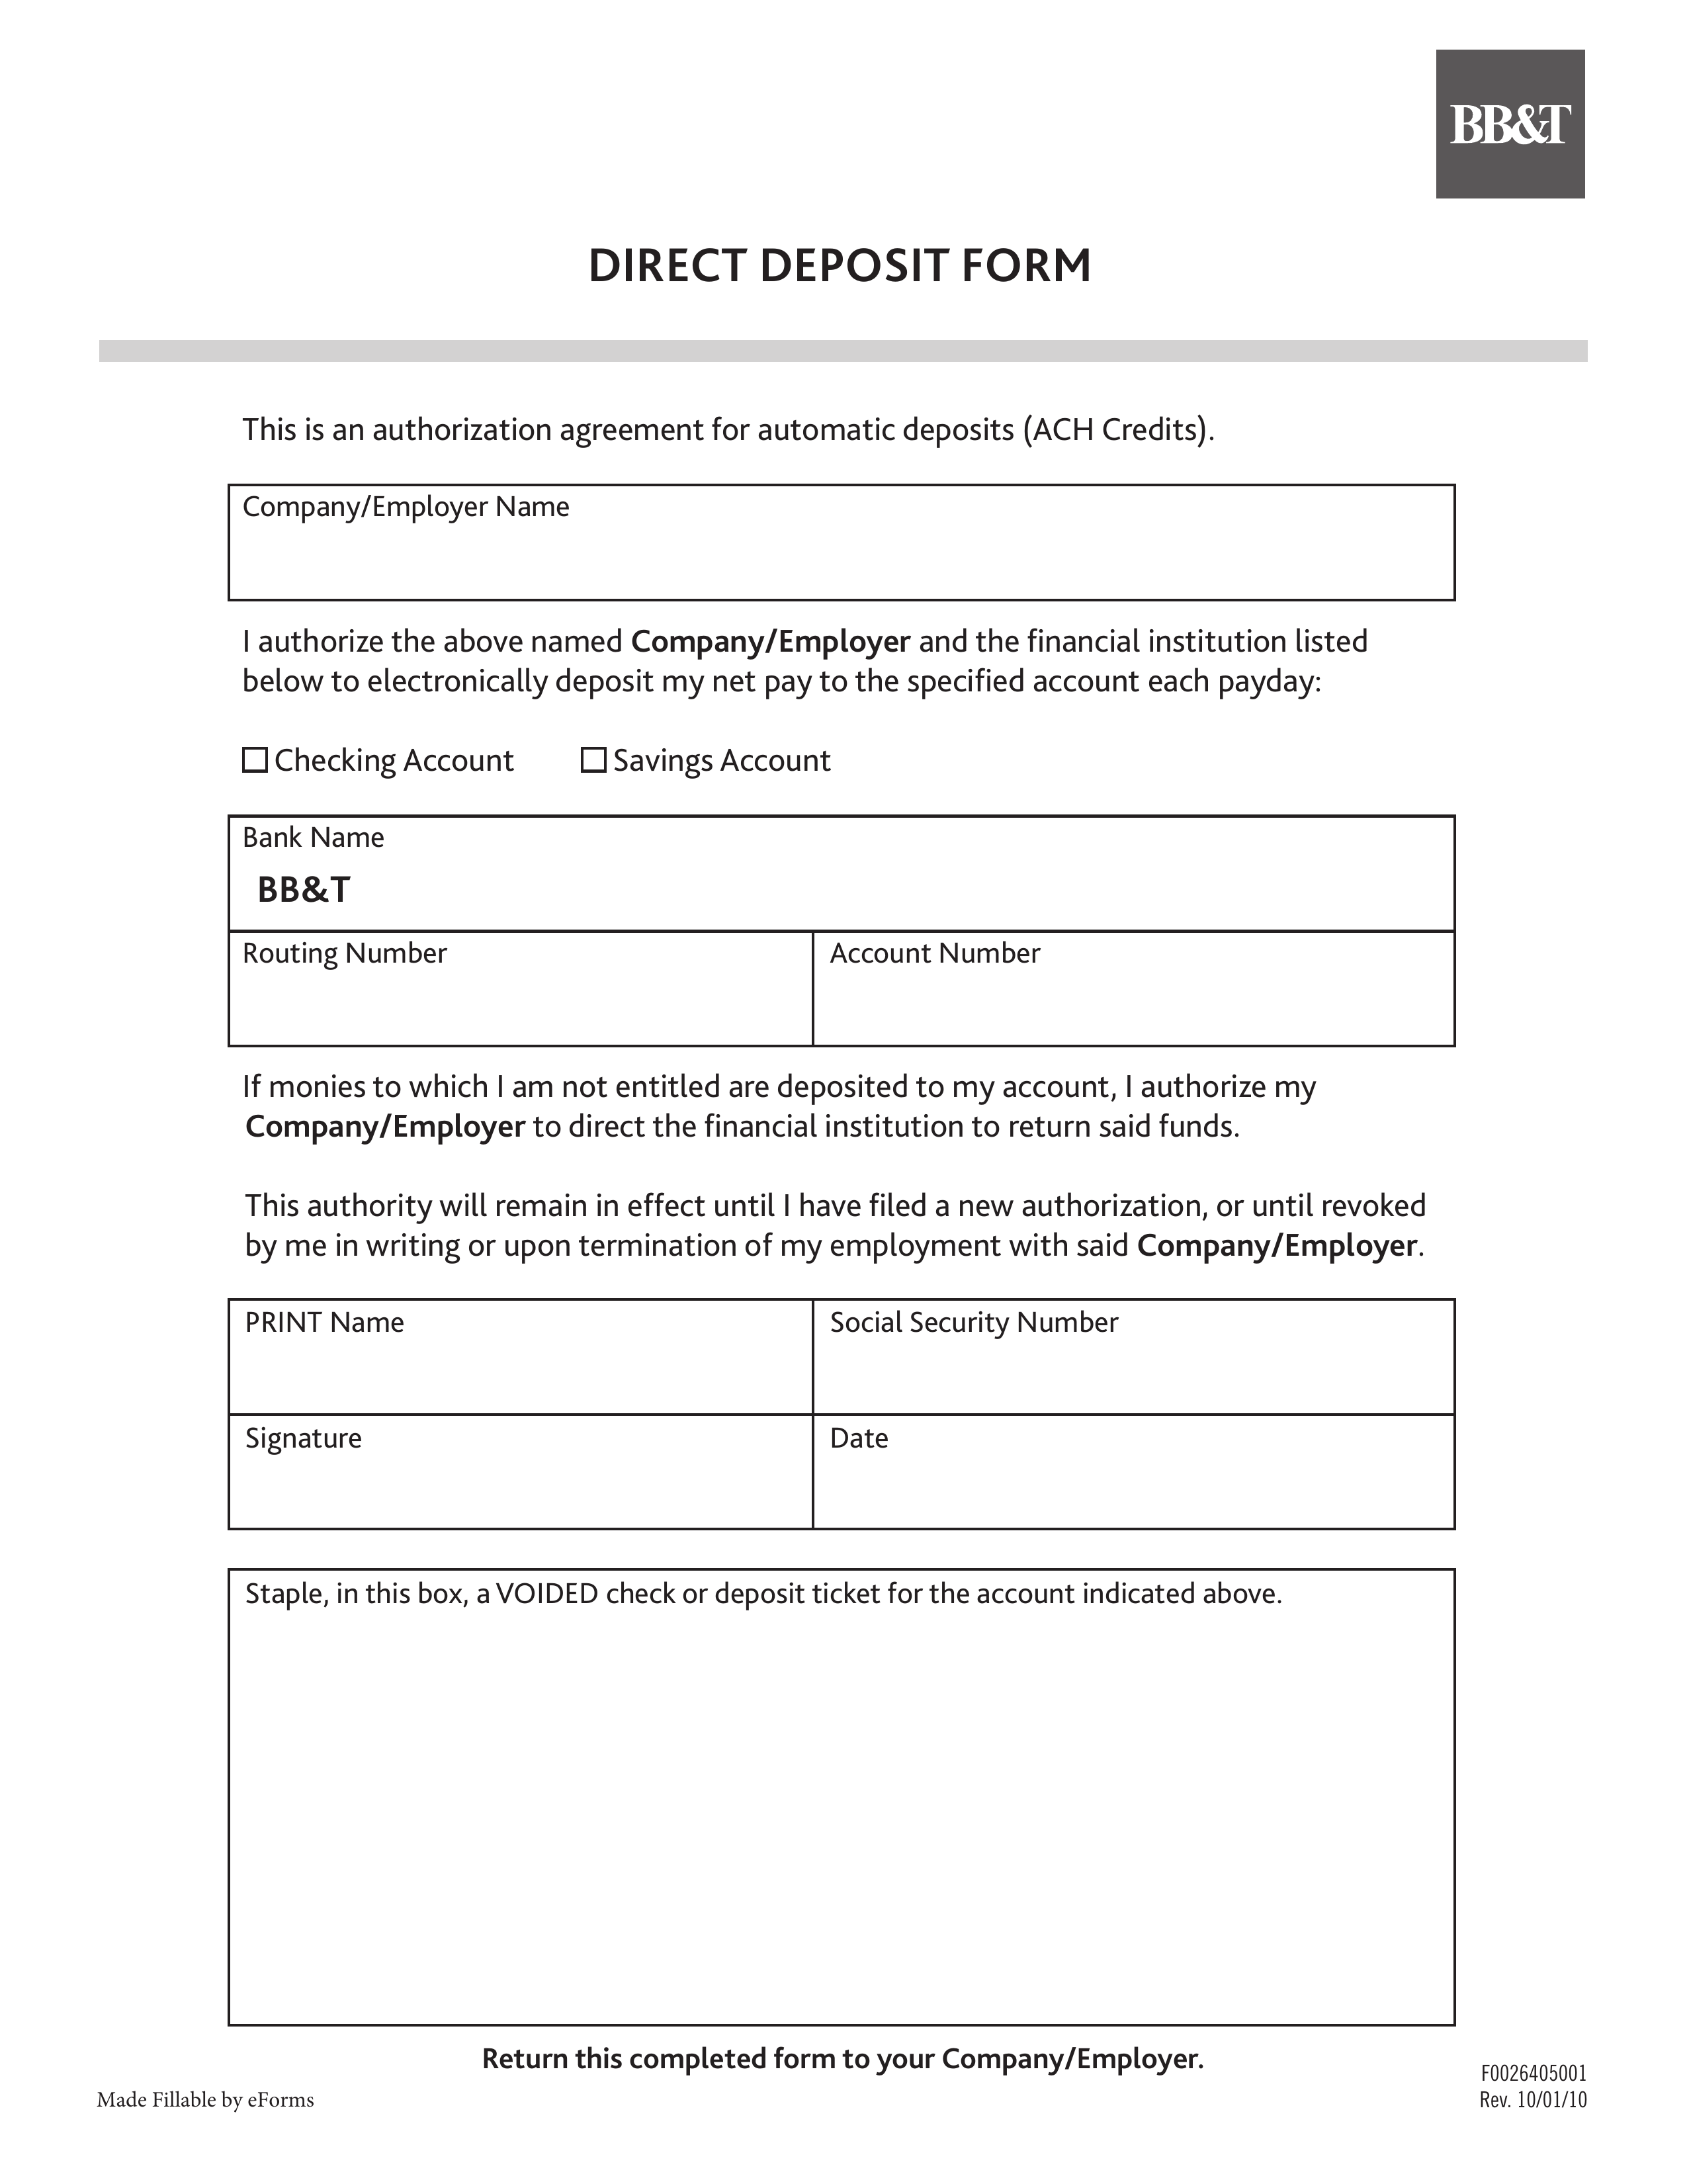 Free BB&T Direct Deposit Authorization Form - PDF – eForms With Direct Deposit Authorization Form Template For Direct Deposit Authorization Form Template